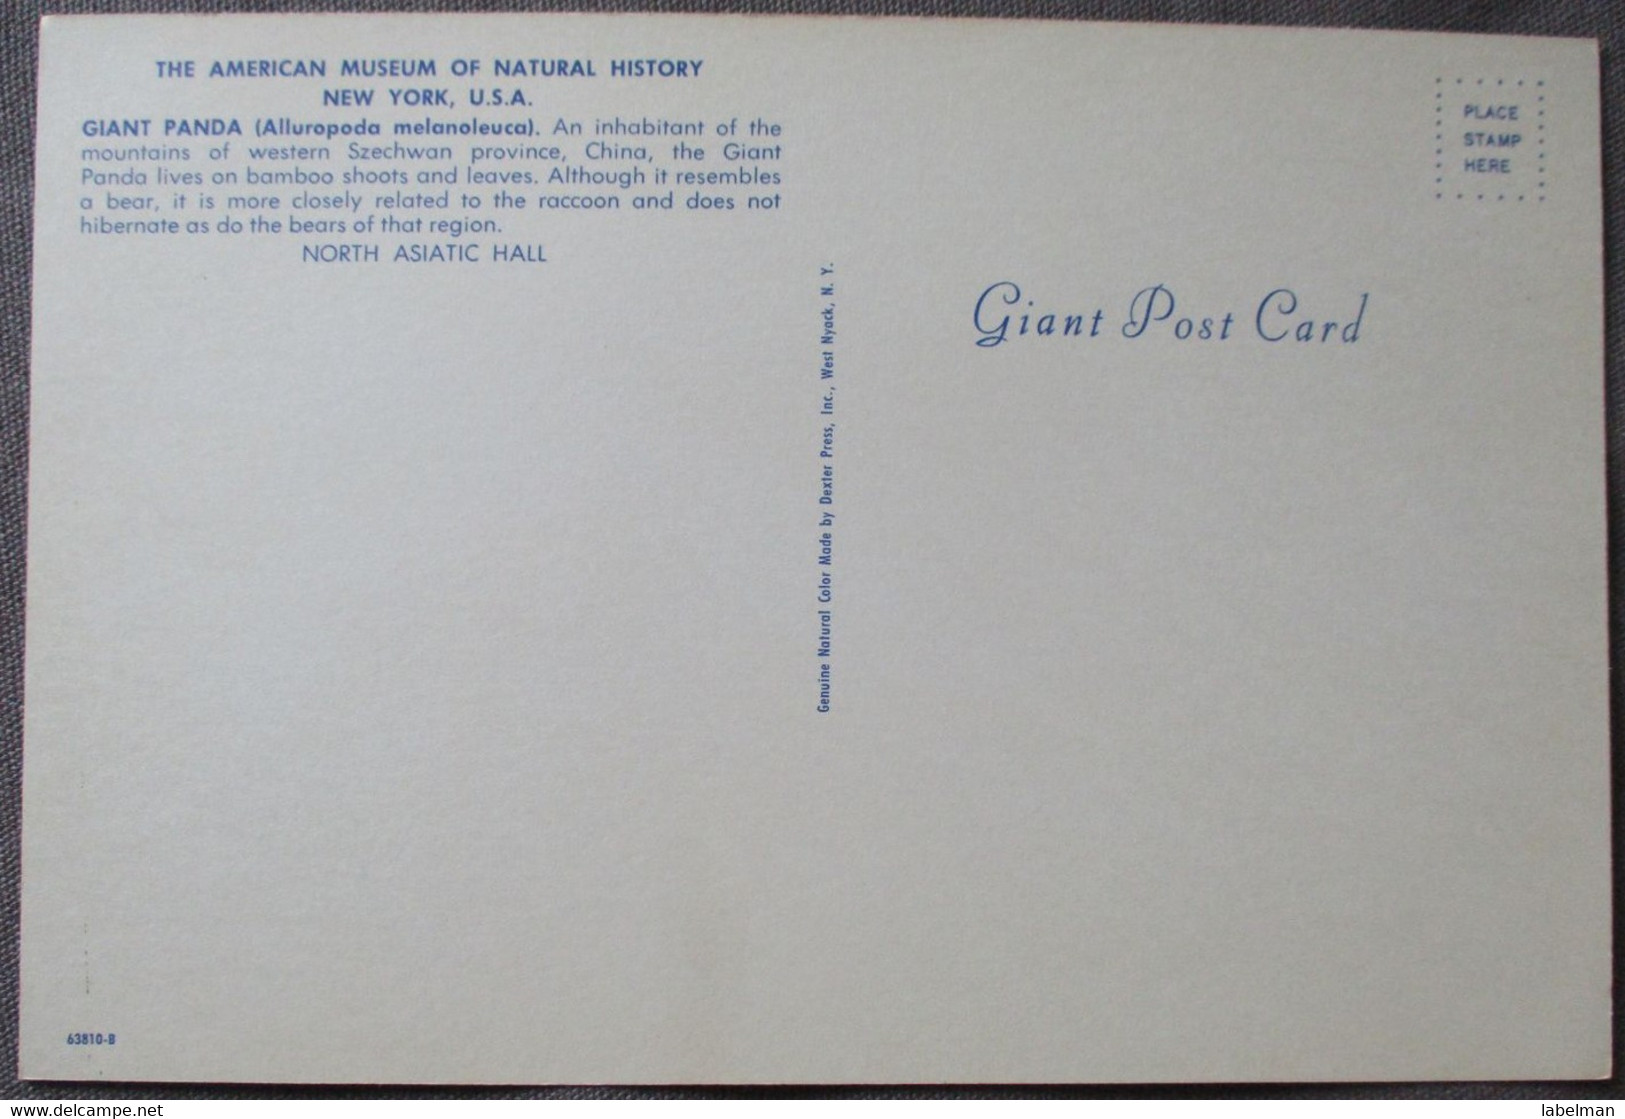 NEW YORK USA GIANT PANDA CARD HISTORY MUSEUM NATURAL GIANT XL CARTE POSTALE ANSICHTSKARTE CARTOLINA POSTCARD PC PC AK - Long Island